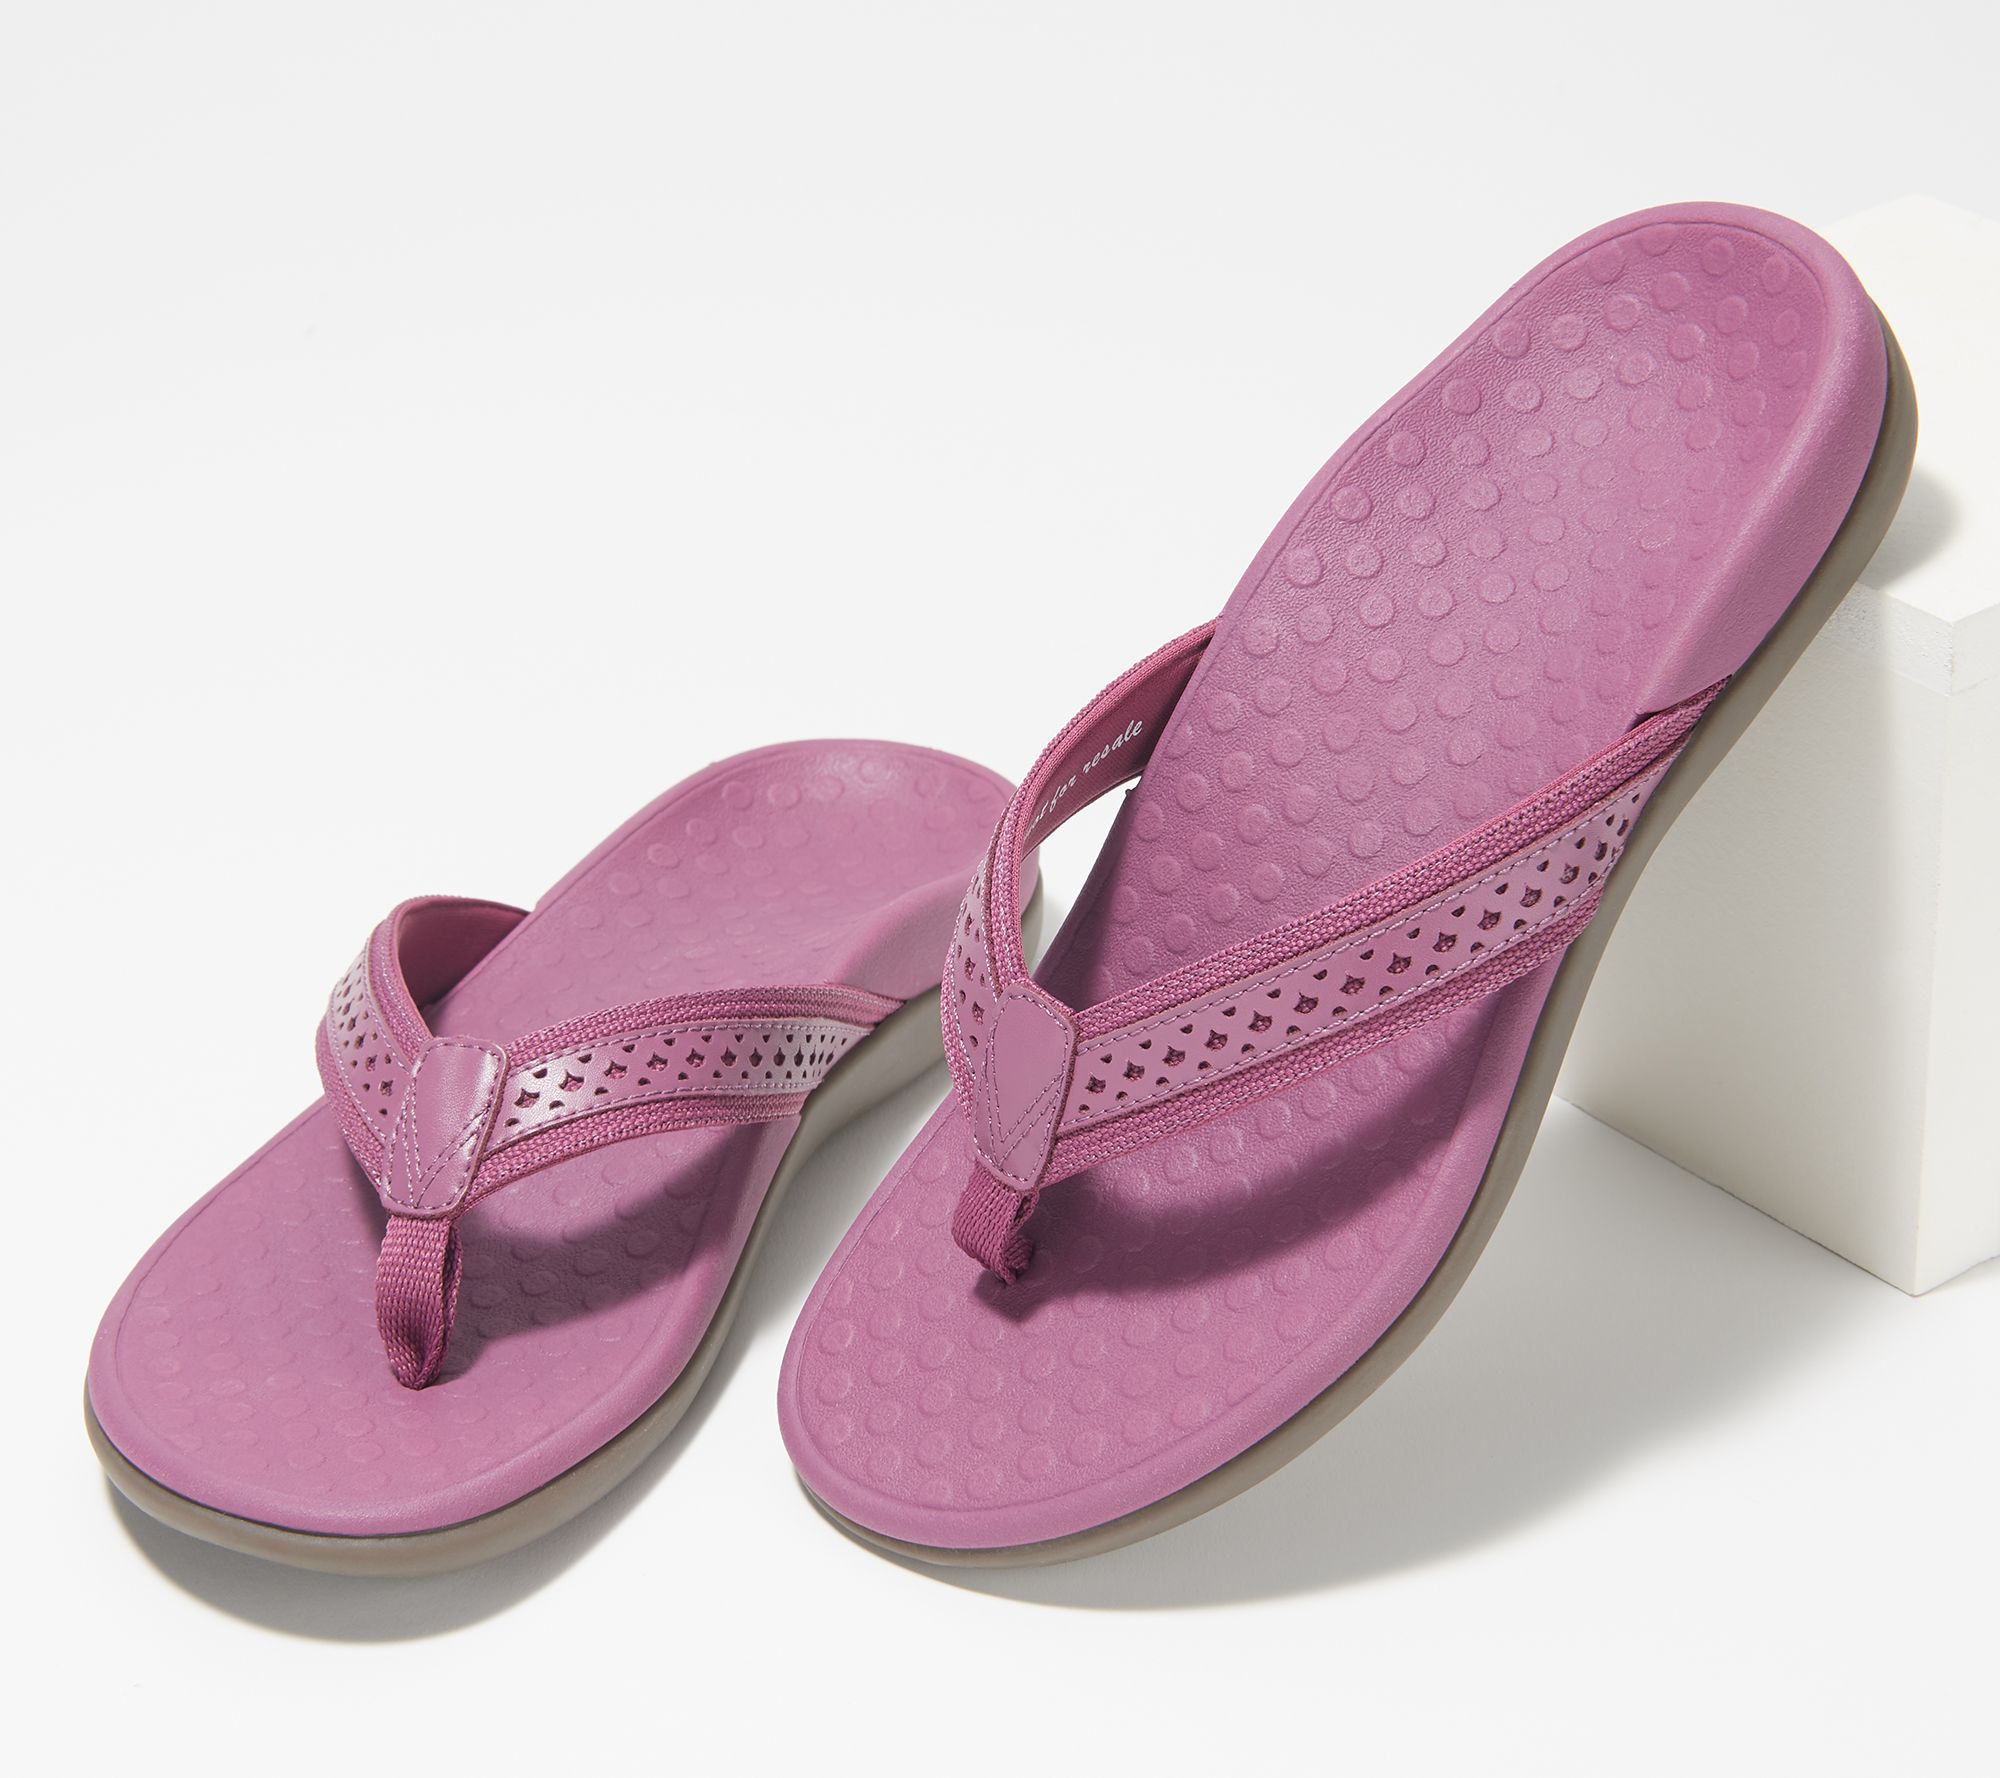 vionic flip flop slippers